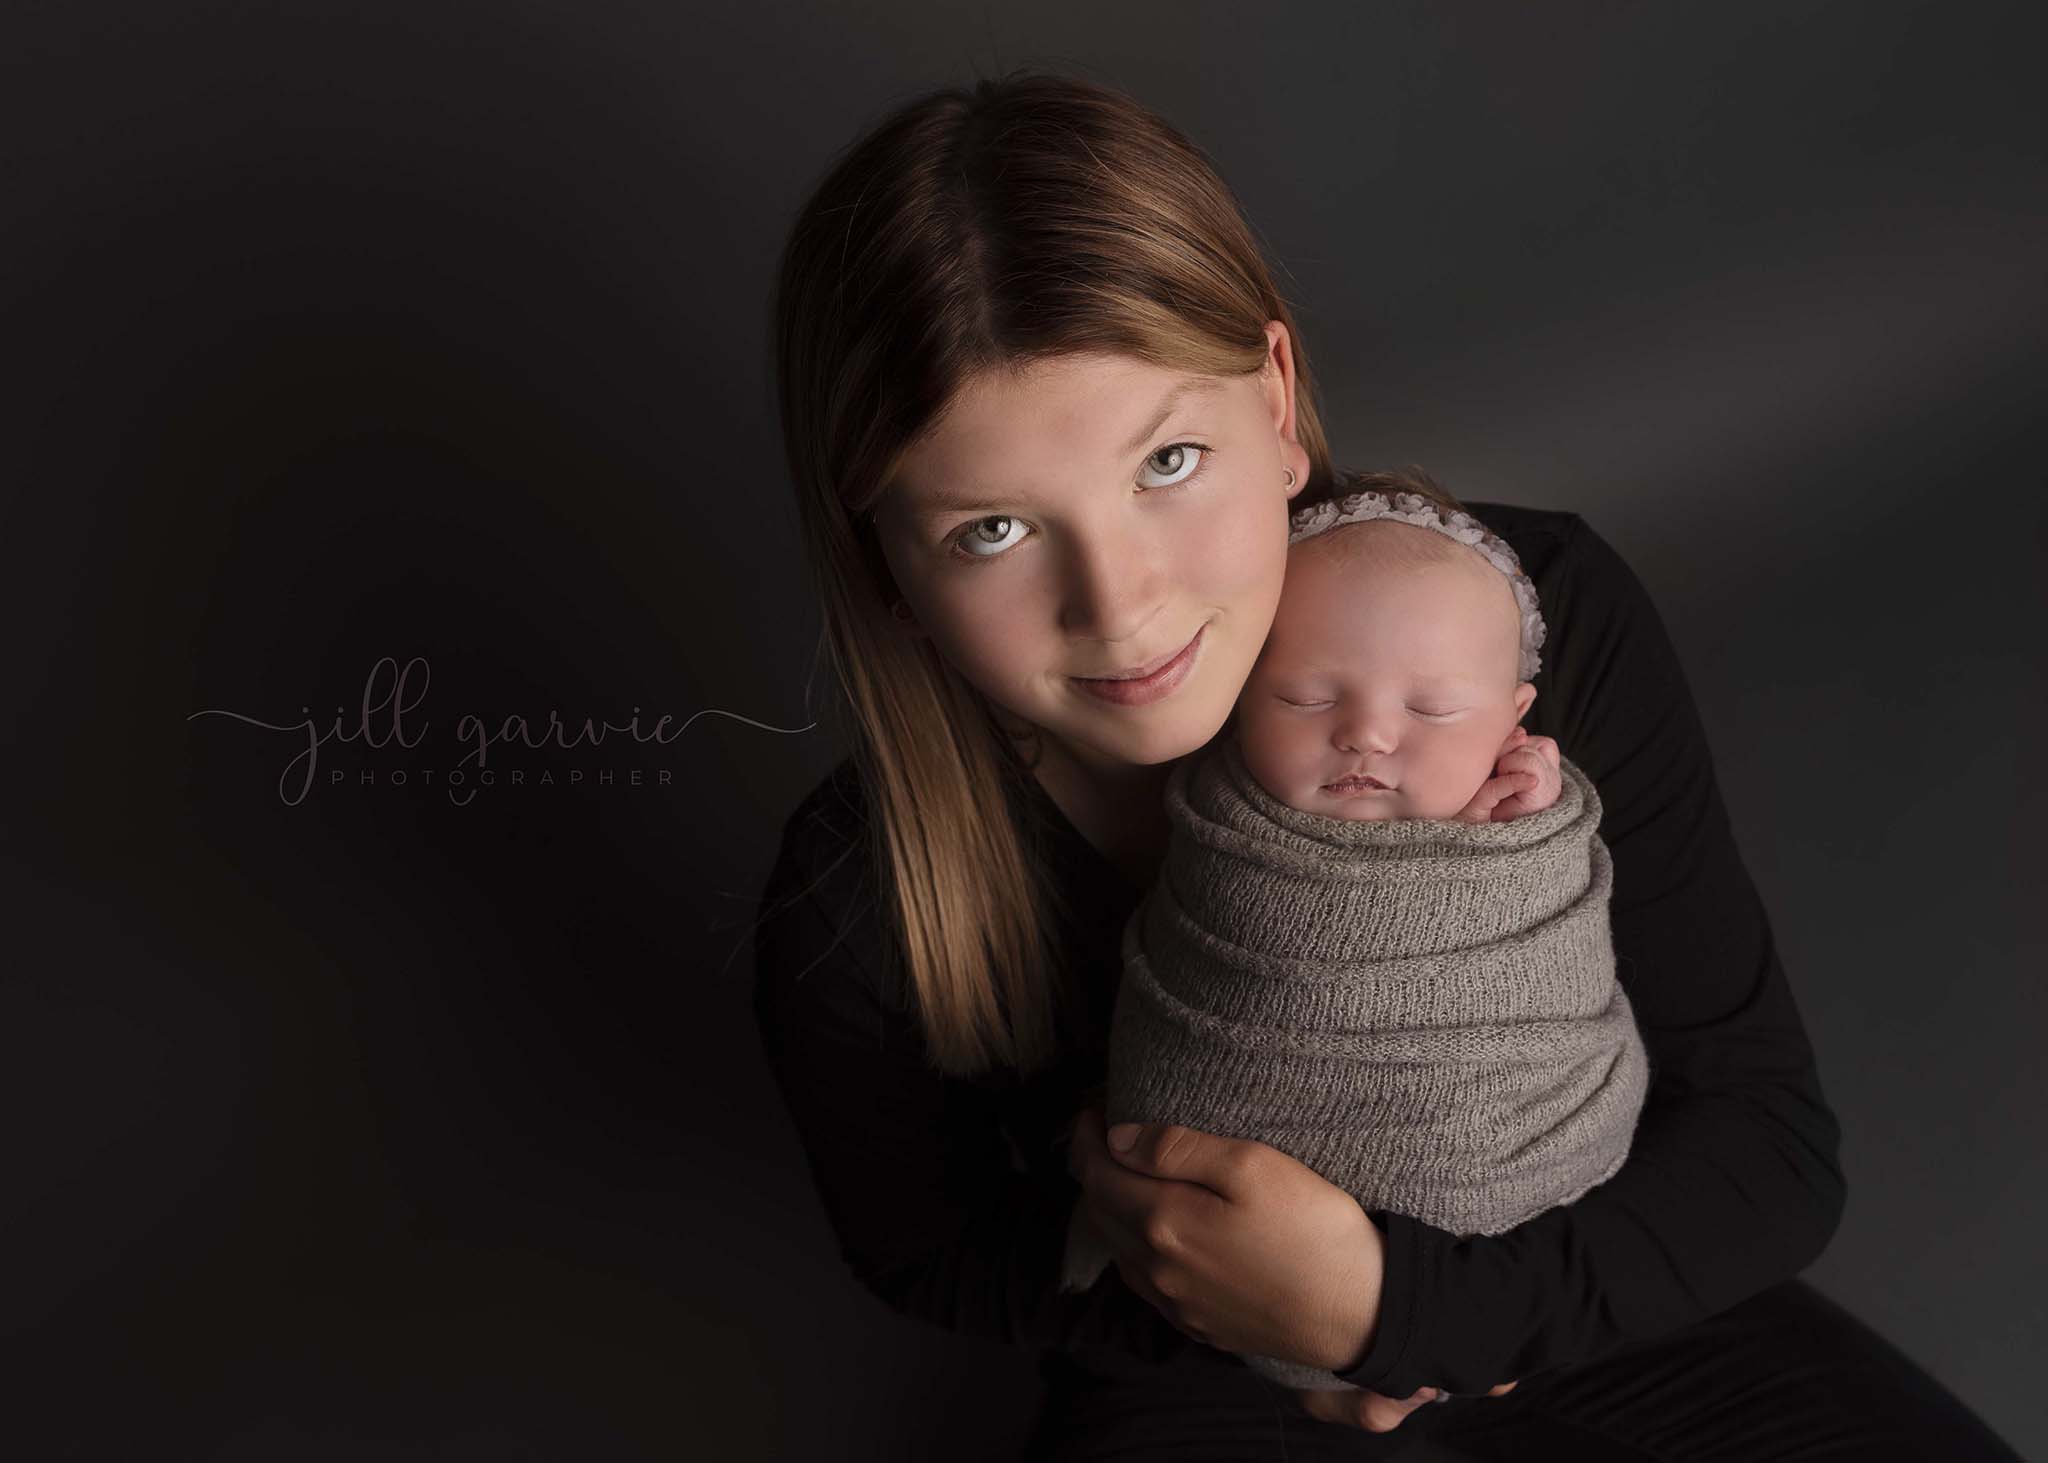 Newborn Photograph Newborn Baby at Jill Garvie Photography Edinburgh